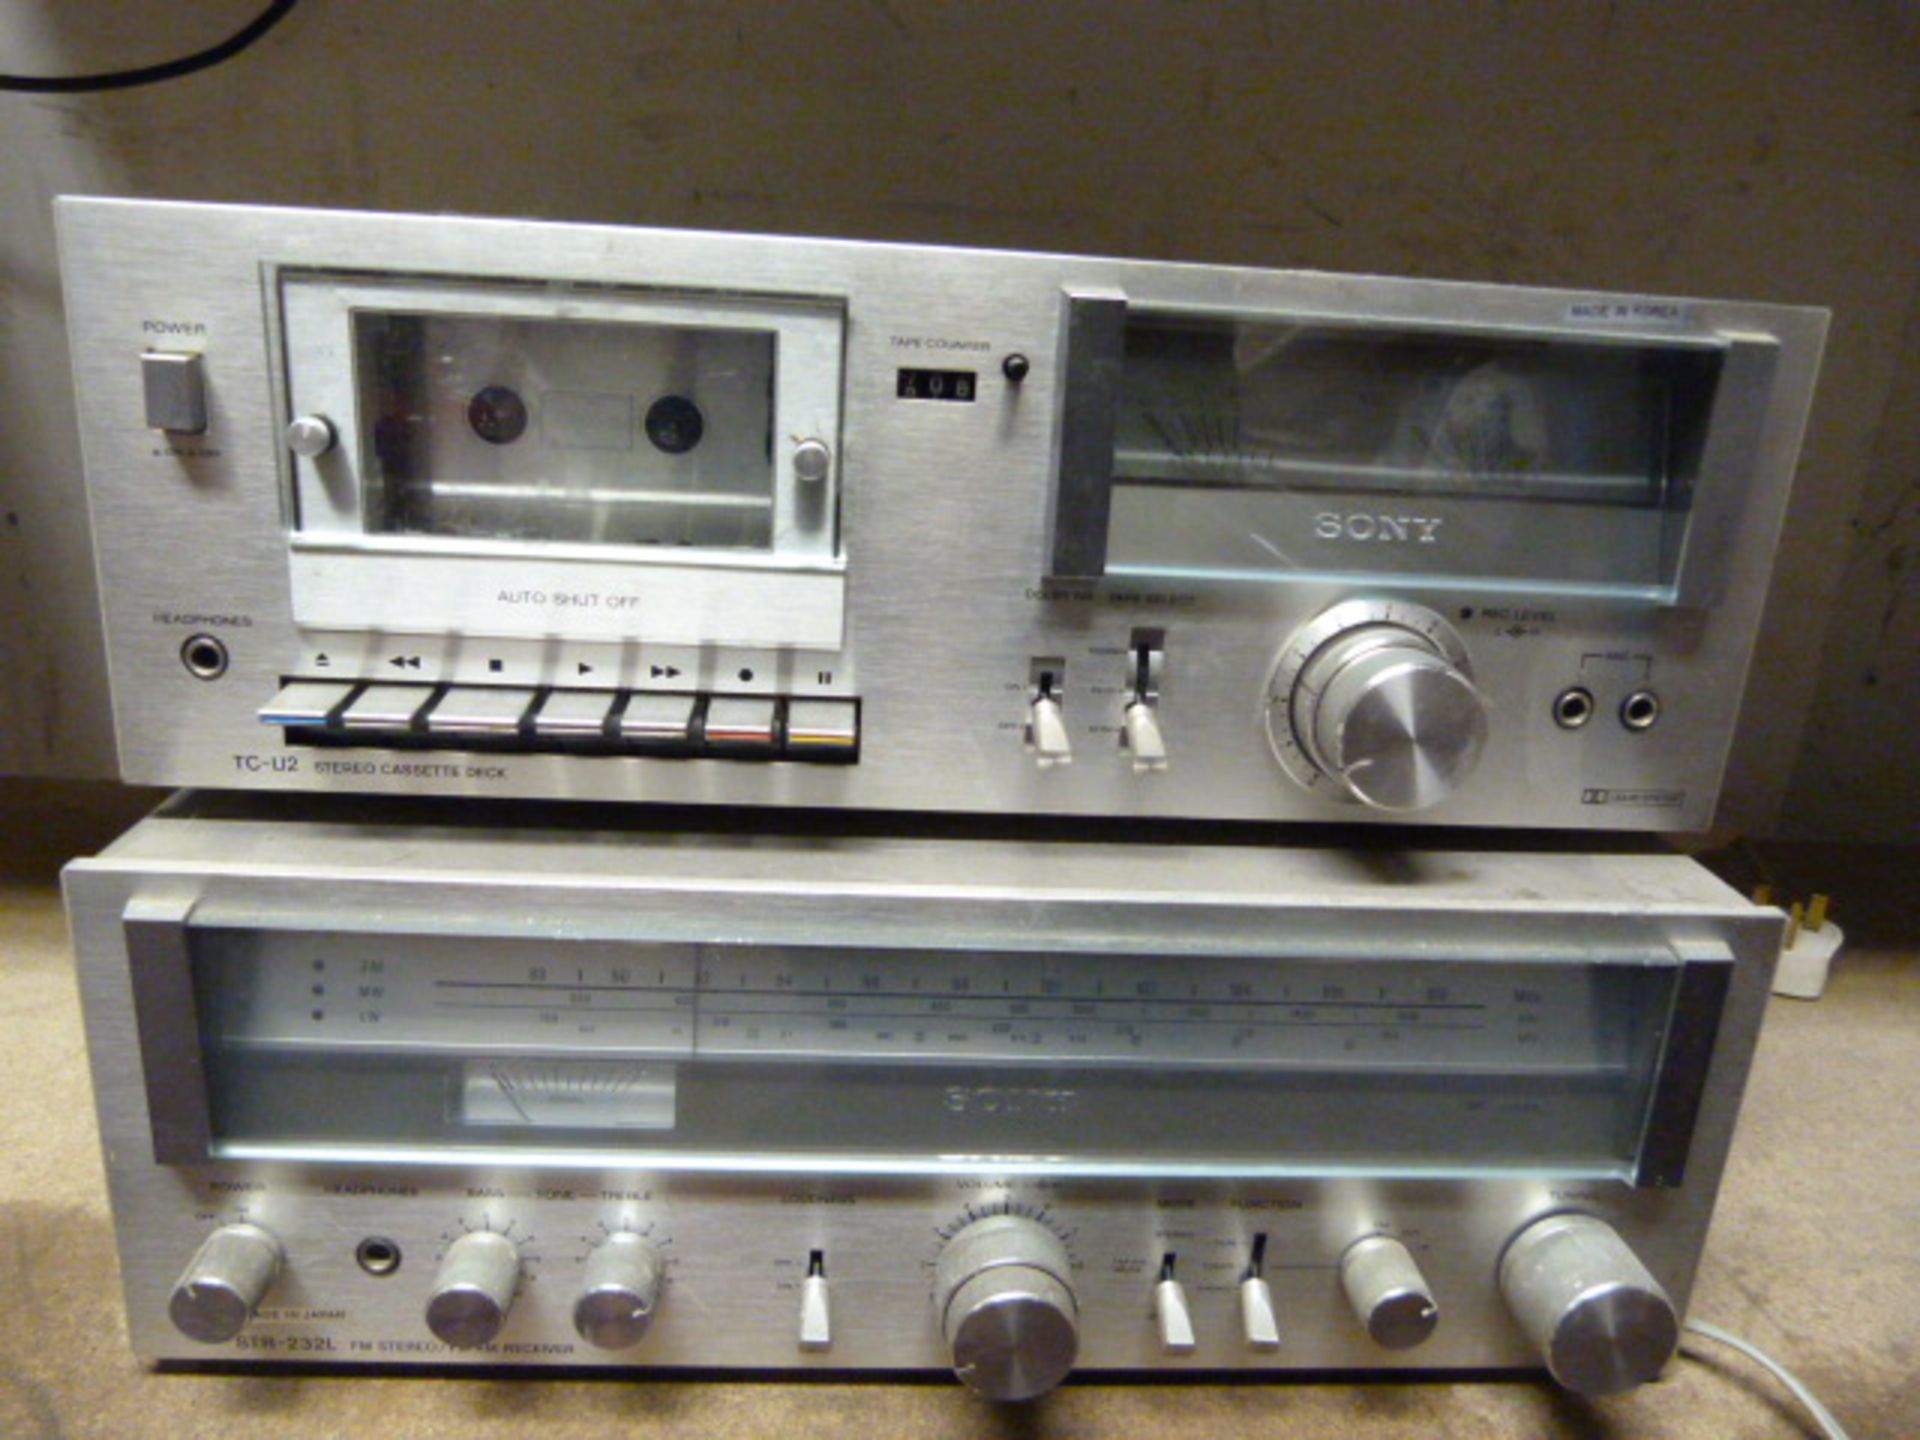 Sony TC-U2 Stereo Cassette Deck and a Sony STR-232